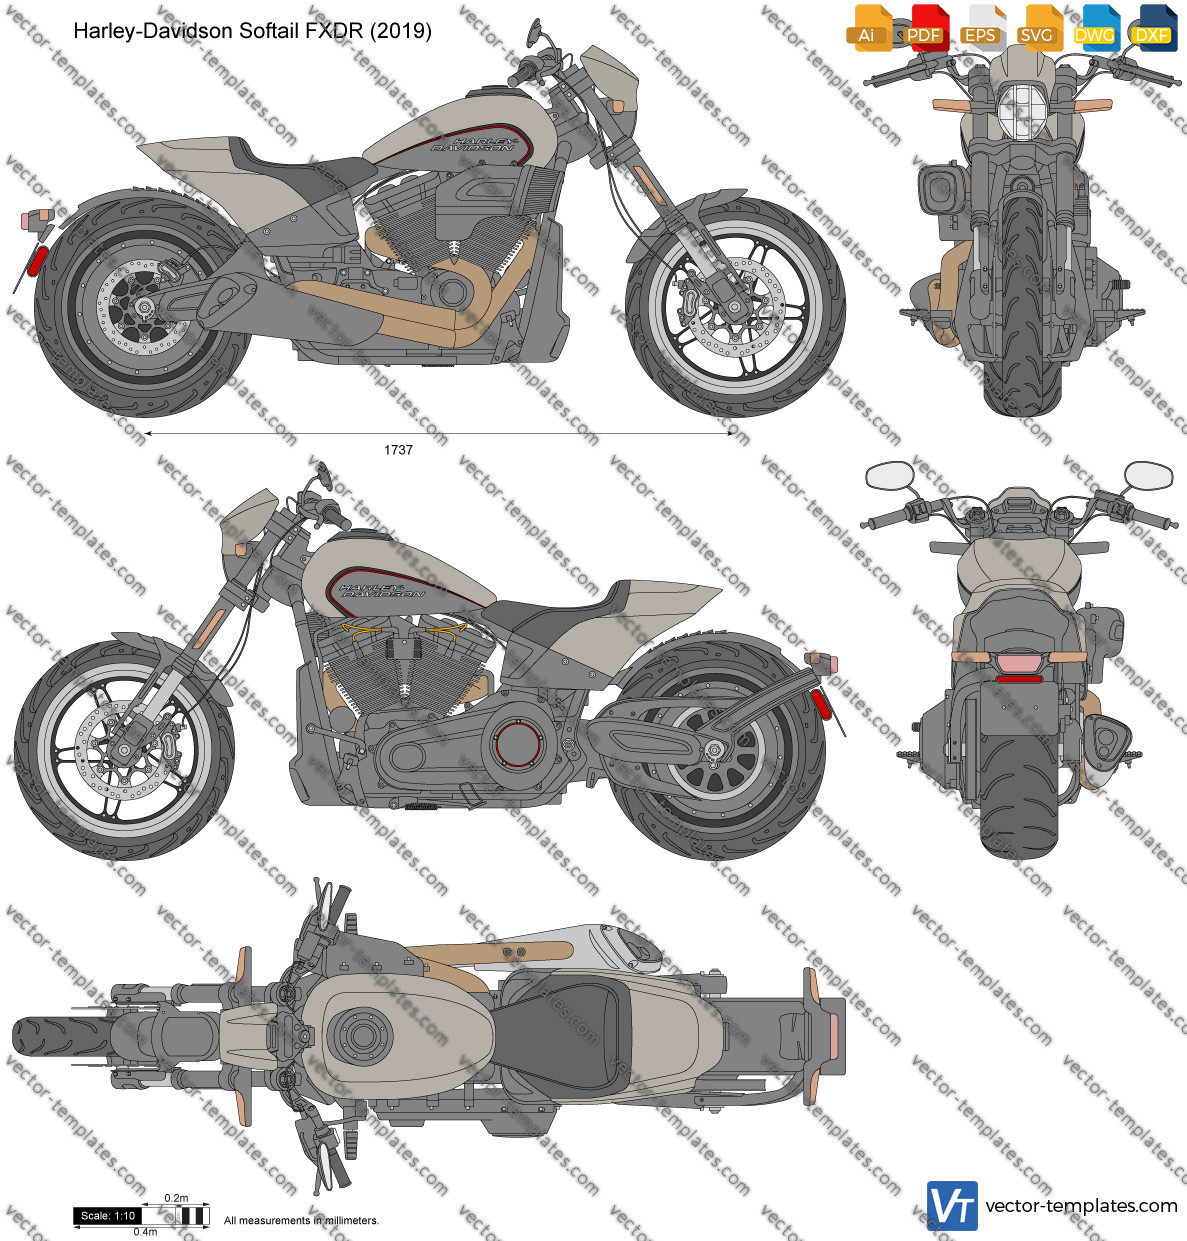 Harley-Davidson Softail FXDR 2019